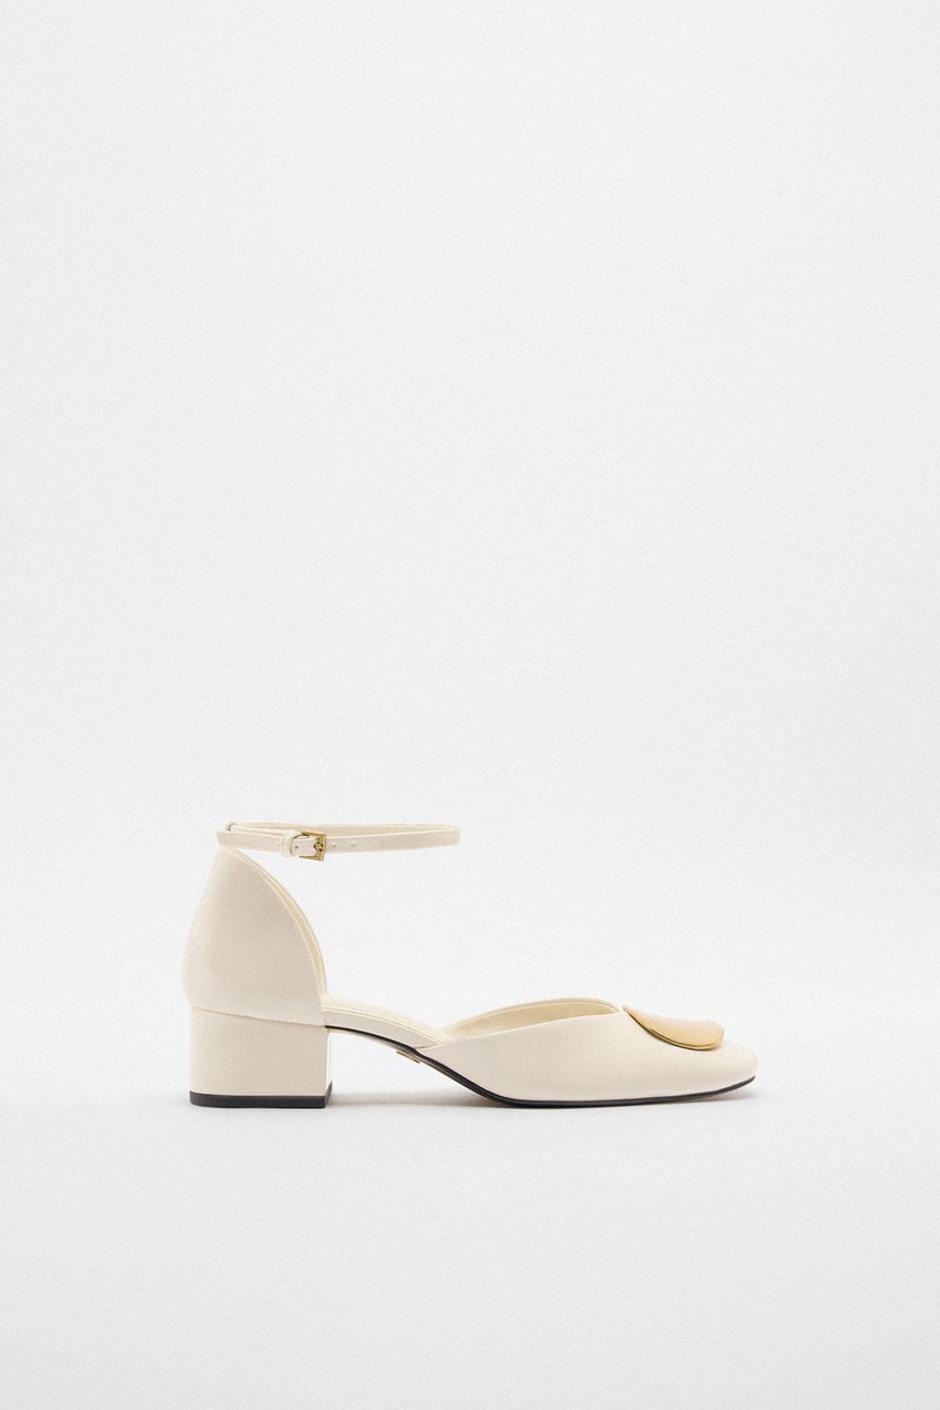 Cipele Zara | Autor: Zara